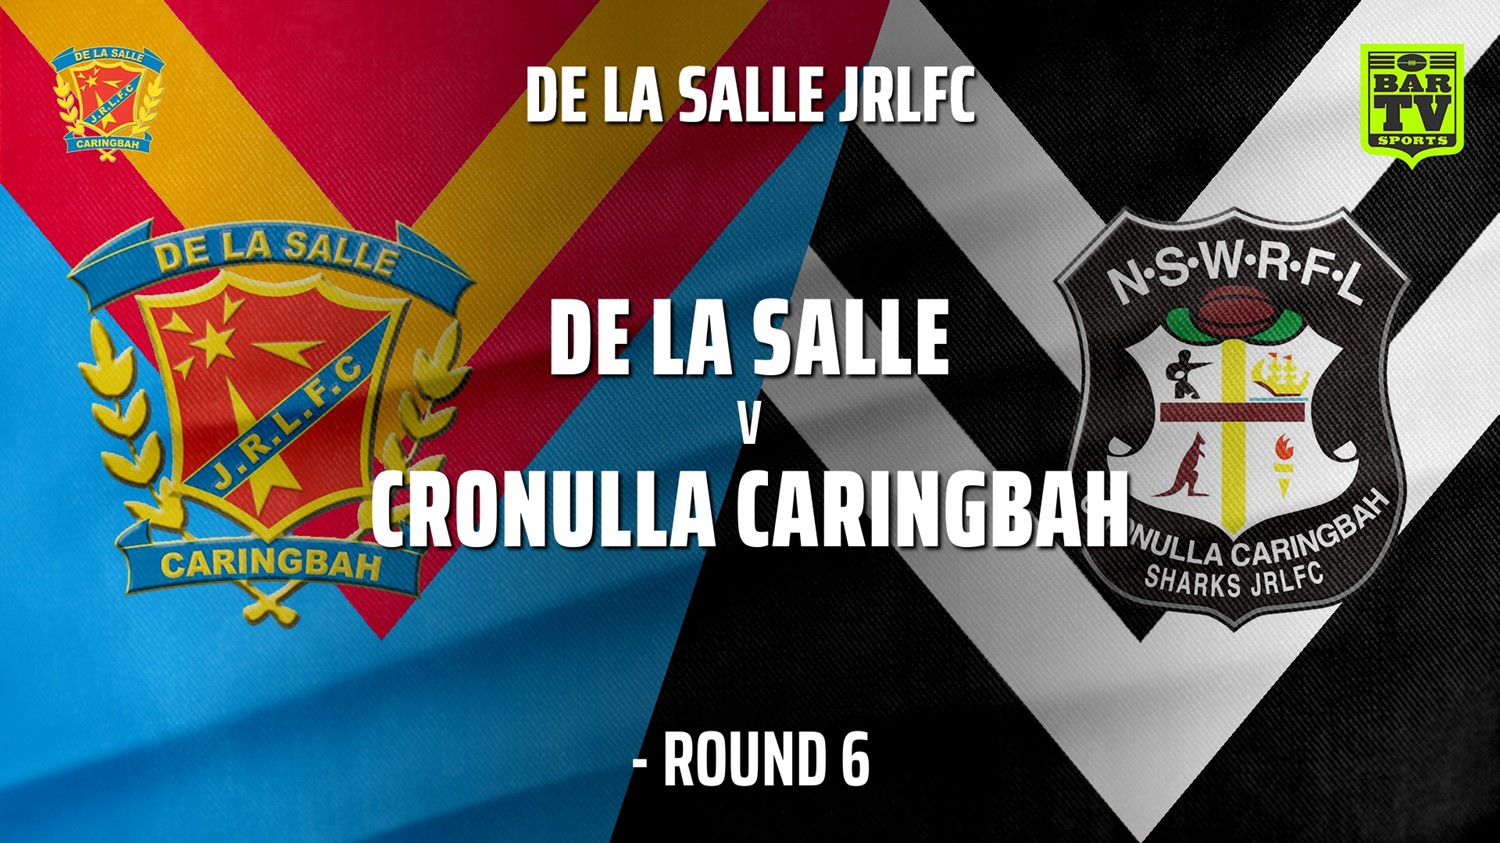 210605-De La Salle - Under 13s -Round 6 - De La Salle v Cronulla Caringbah (1) Slate Image